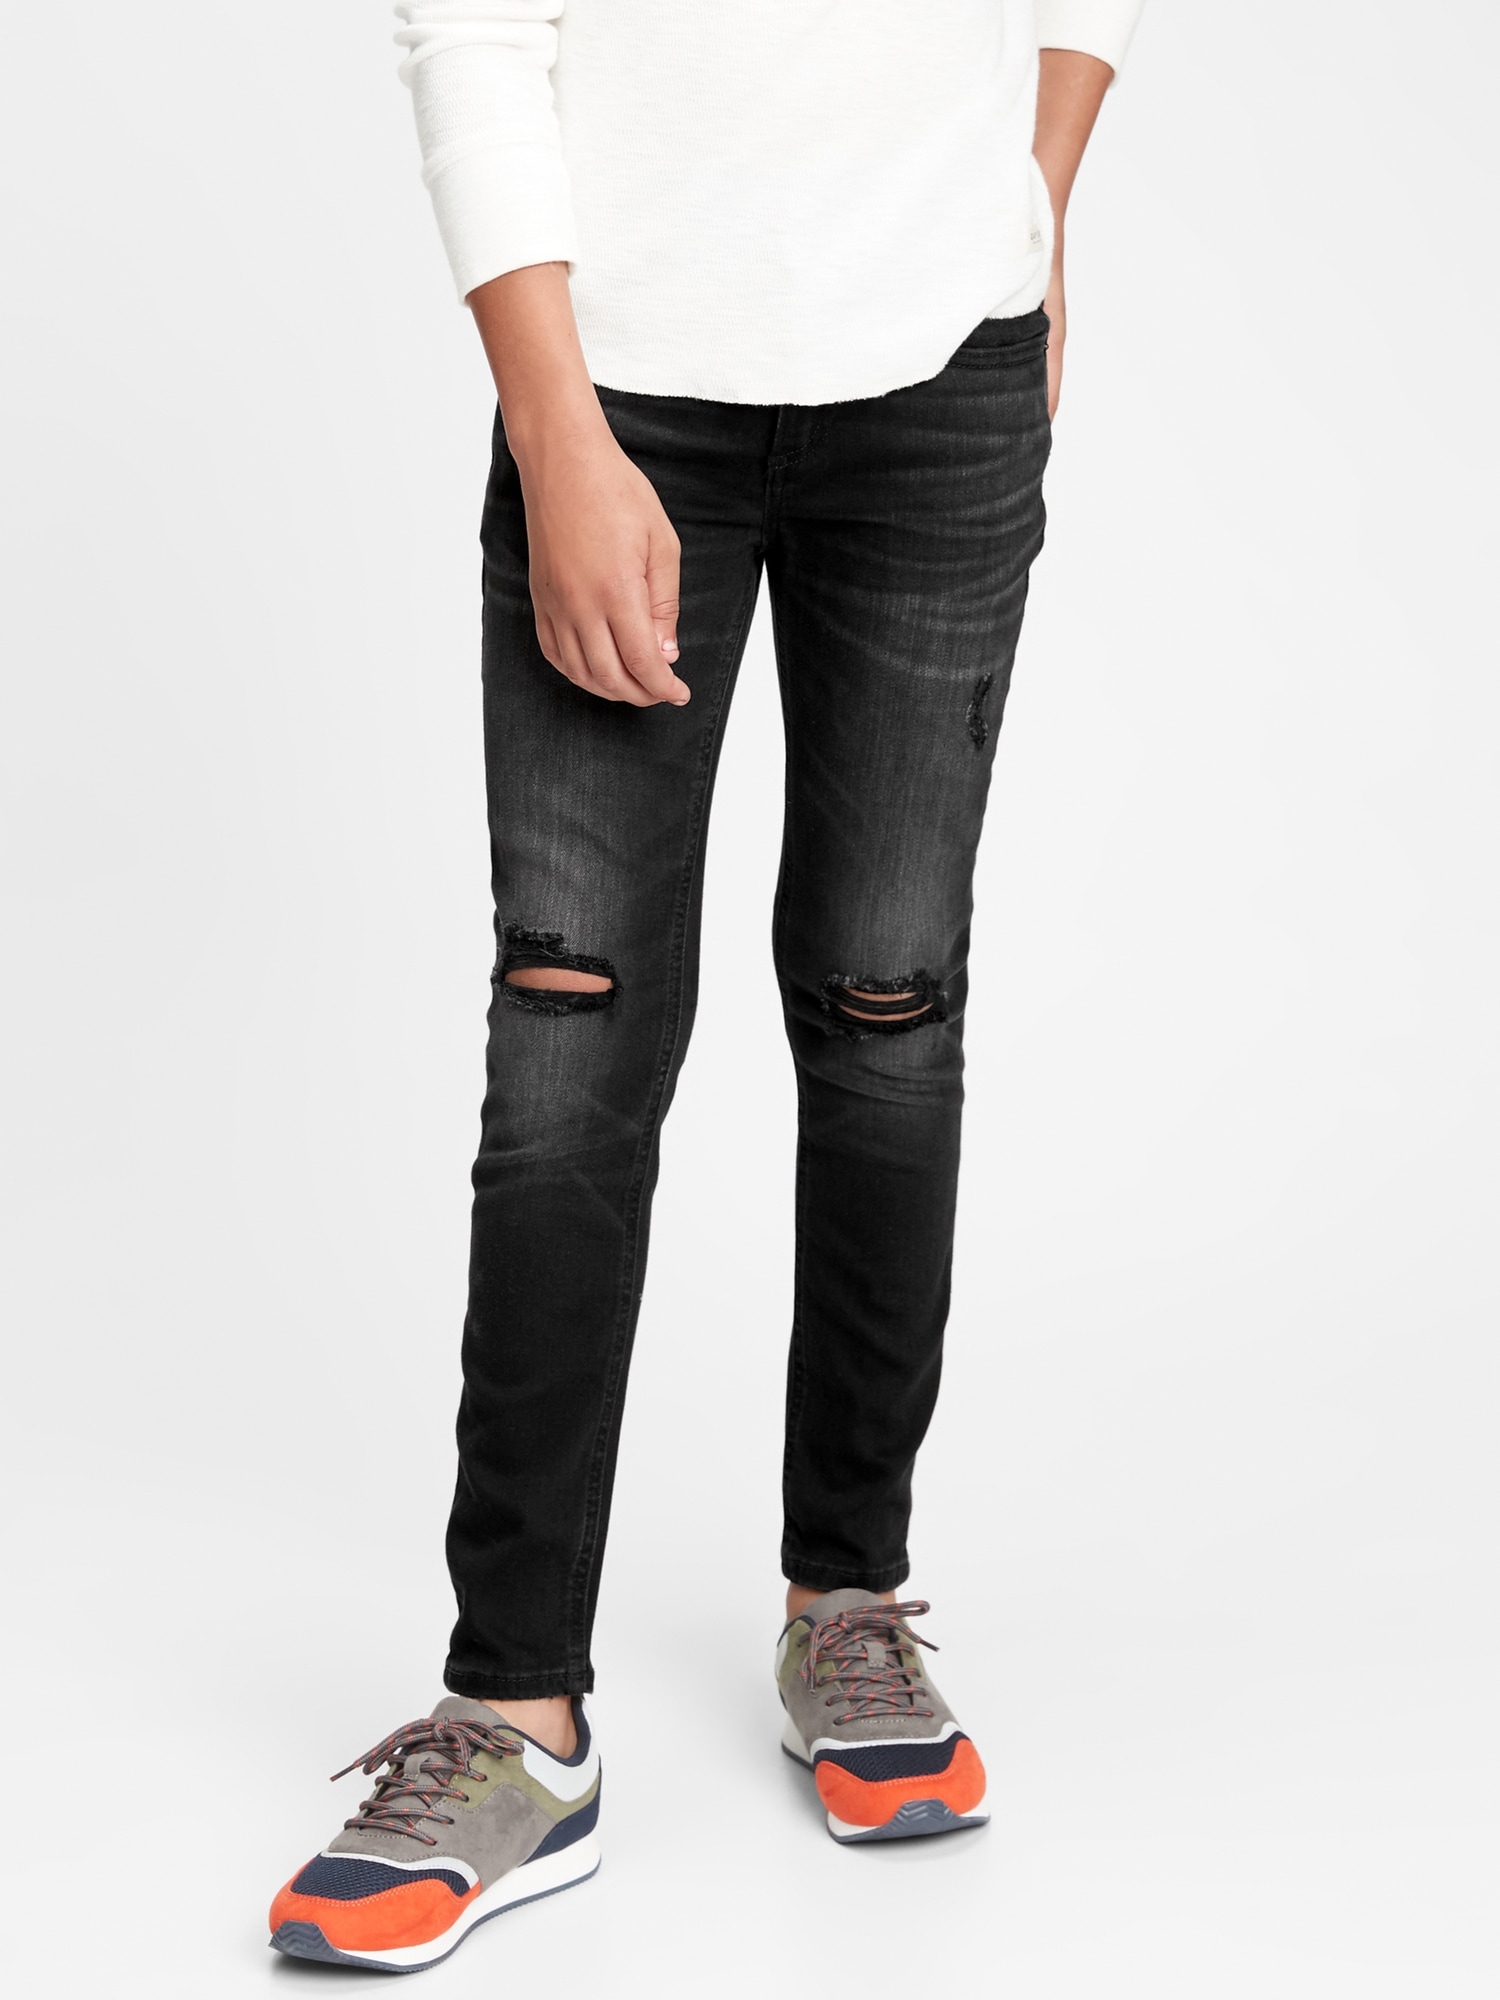 Gap Kids Skinny Jeans with Washwell Dark Wash